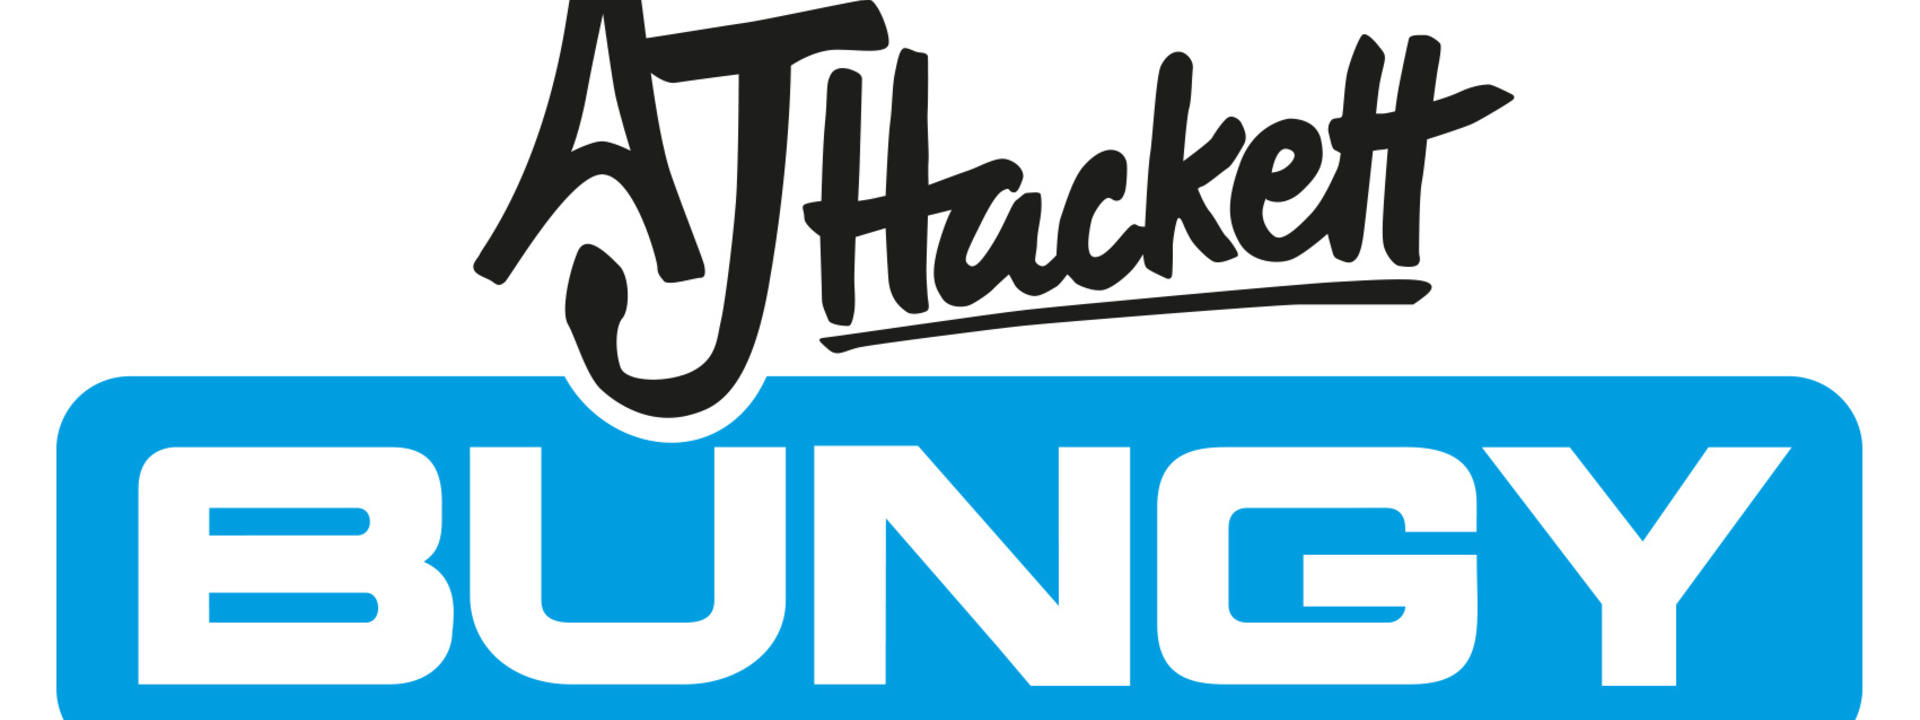 Logo: AJ Hackett Bungy Queenstown